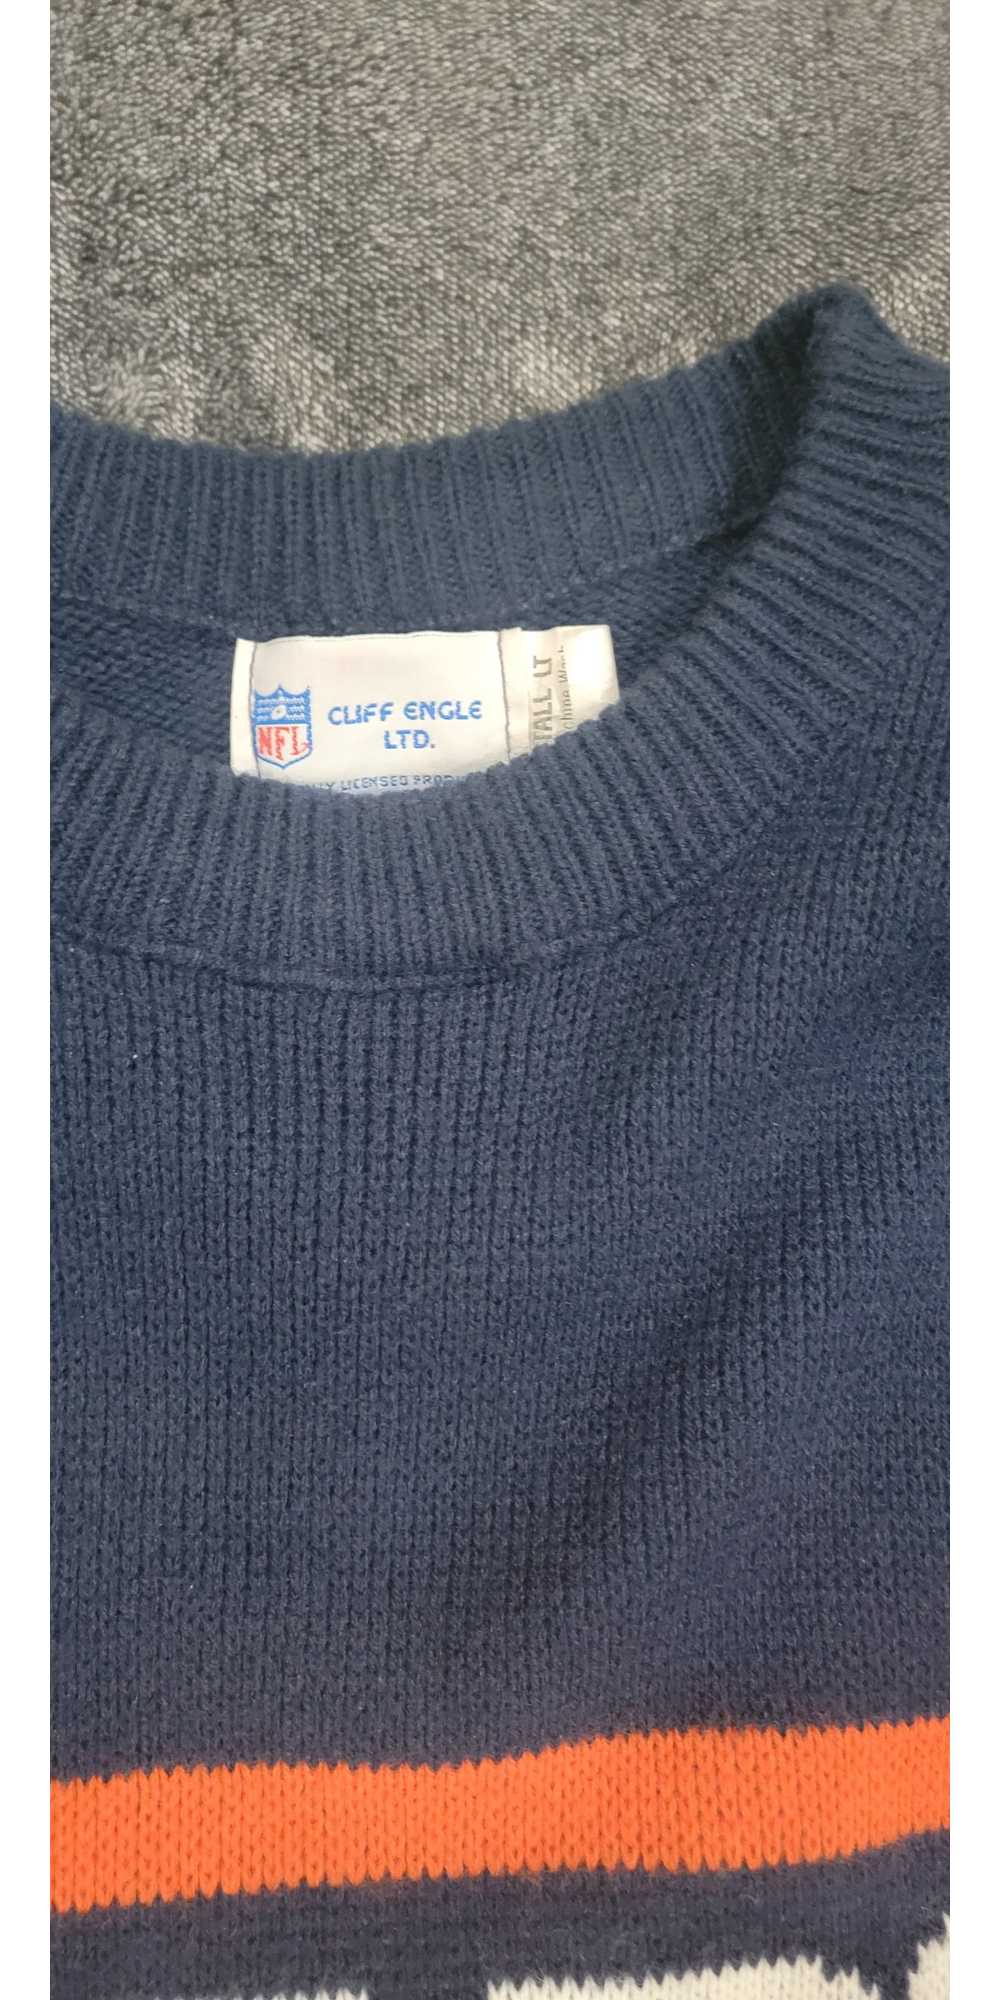 NFL Vintage Chicago Bears Sweater - image 2